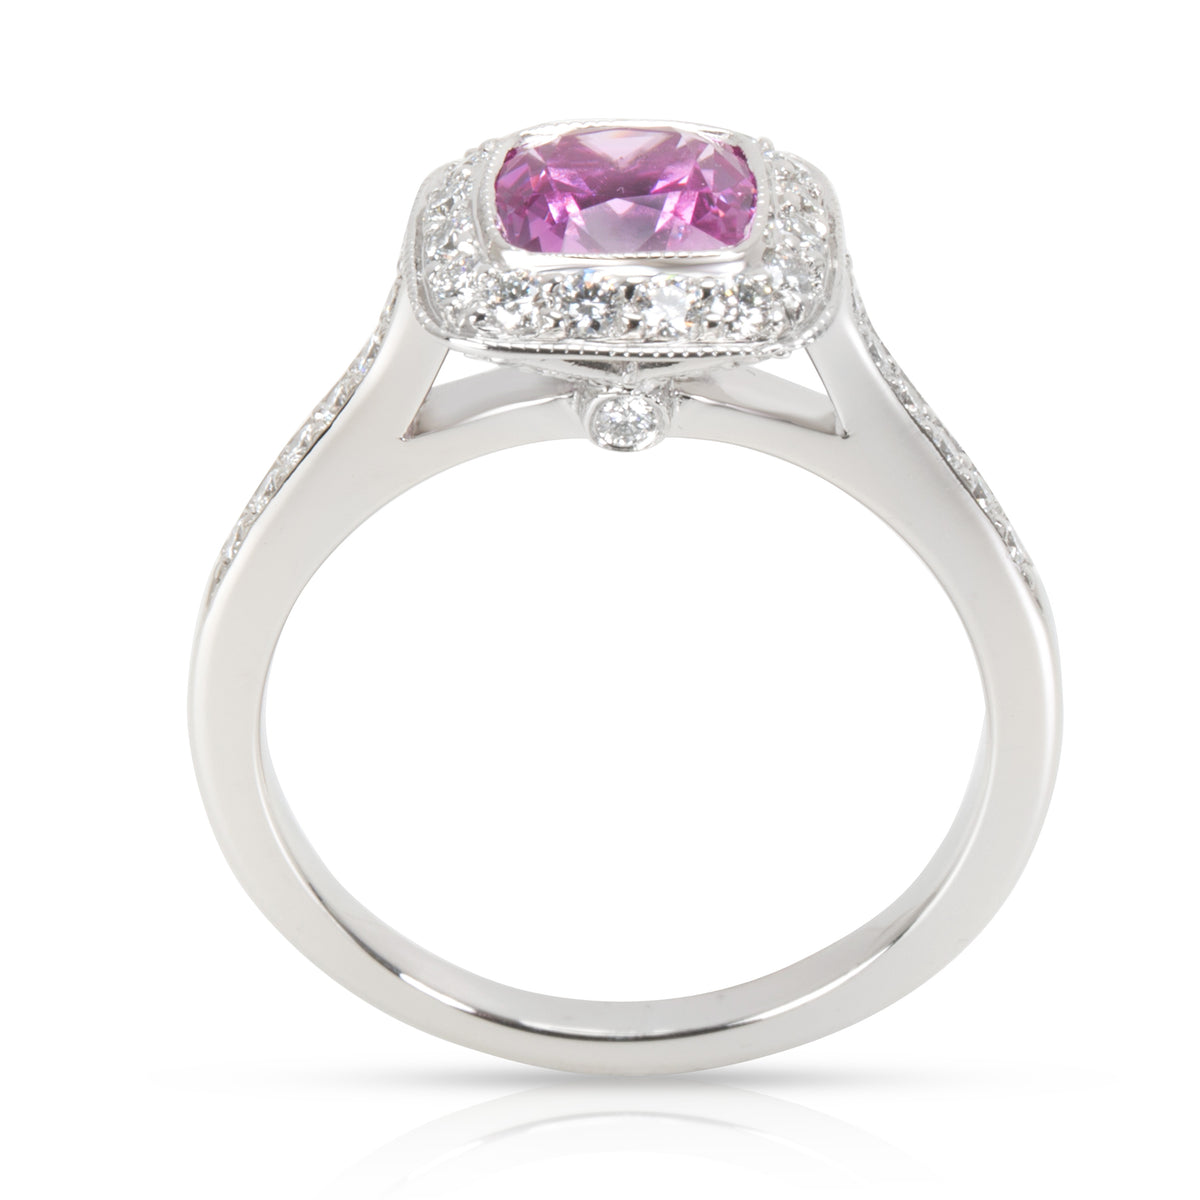 Tiffany & Co. Legacy Pink Sapphire & Diamond Ring in Platinum